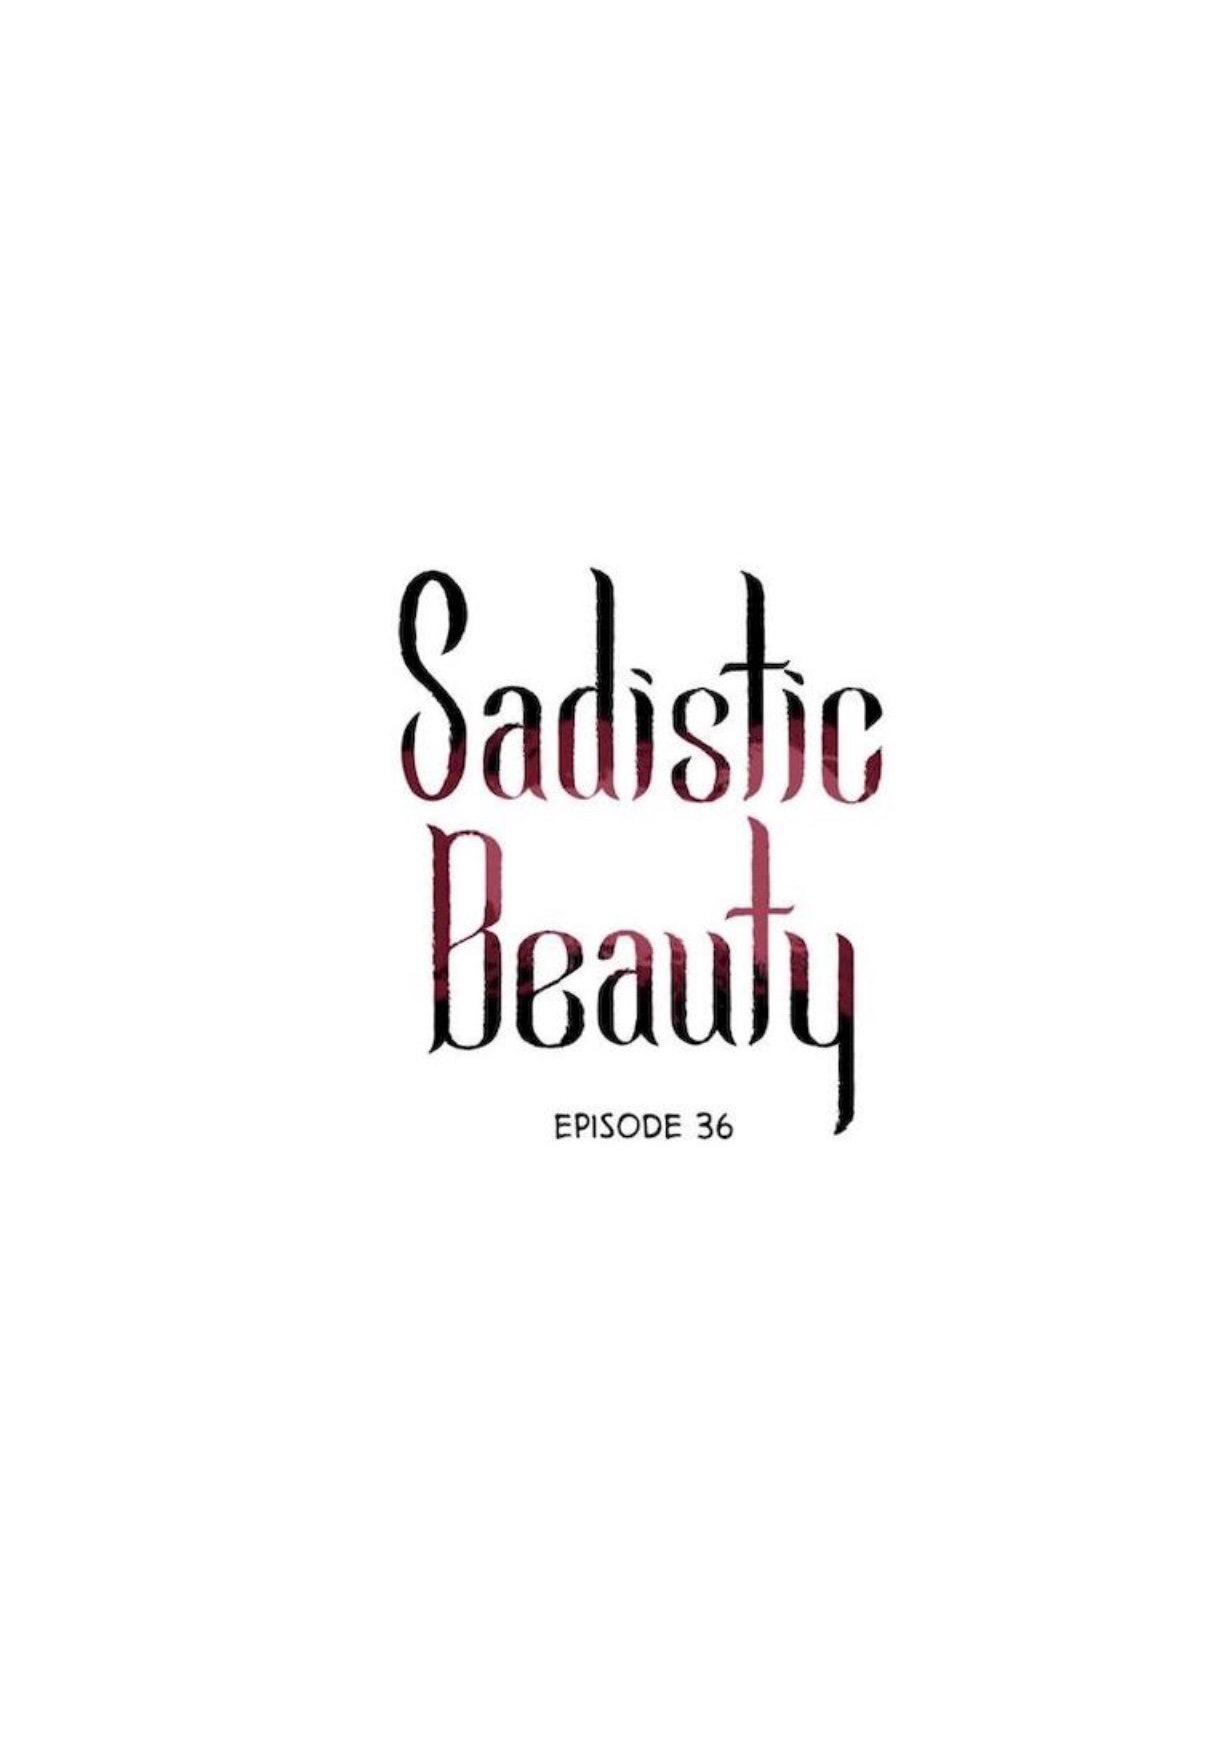 Nữ Tiểu Thuyết Gia Dậm Bao - Beauty Of Sadistic